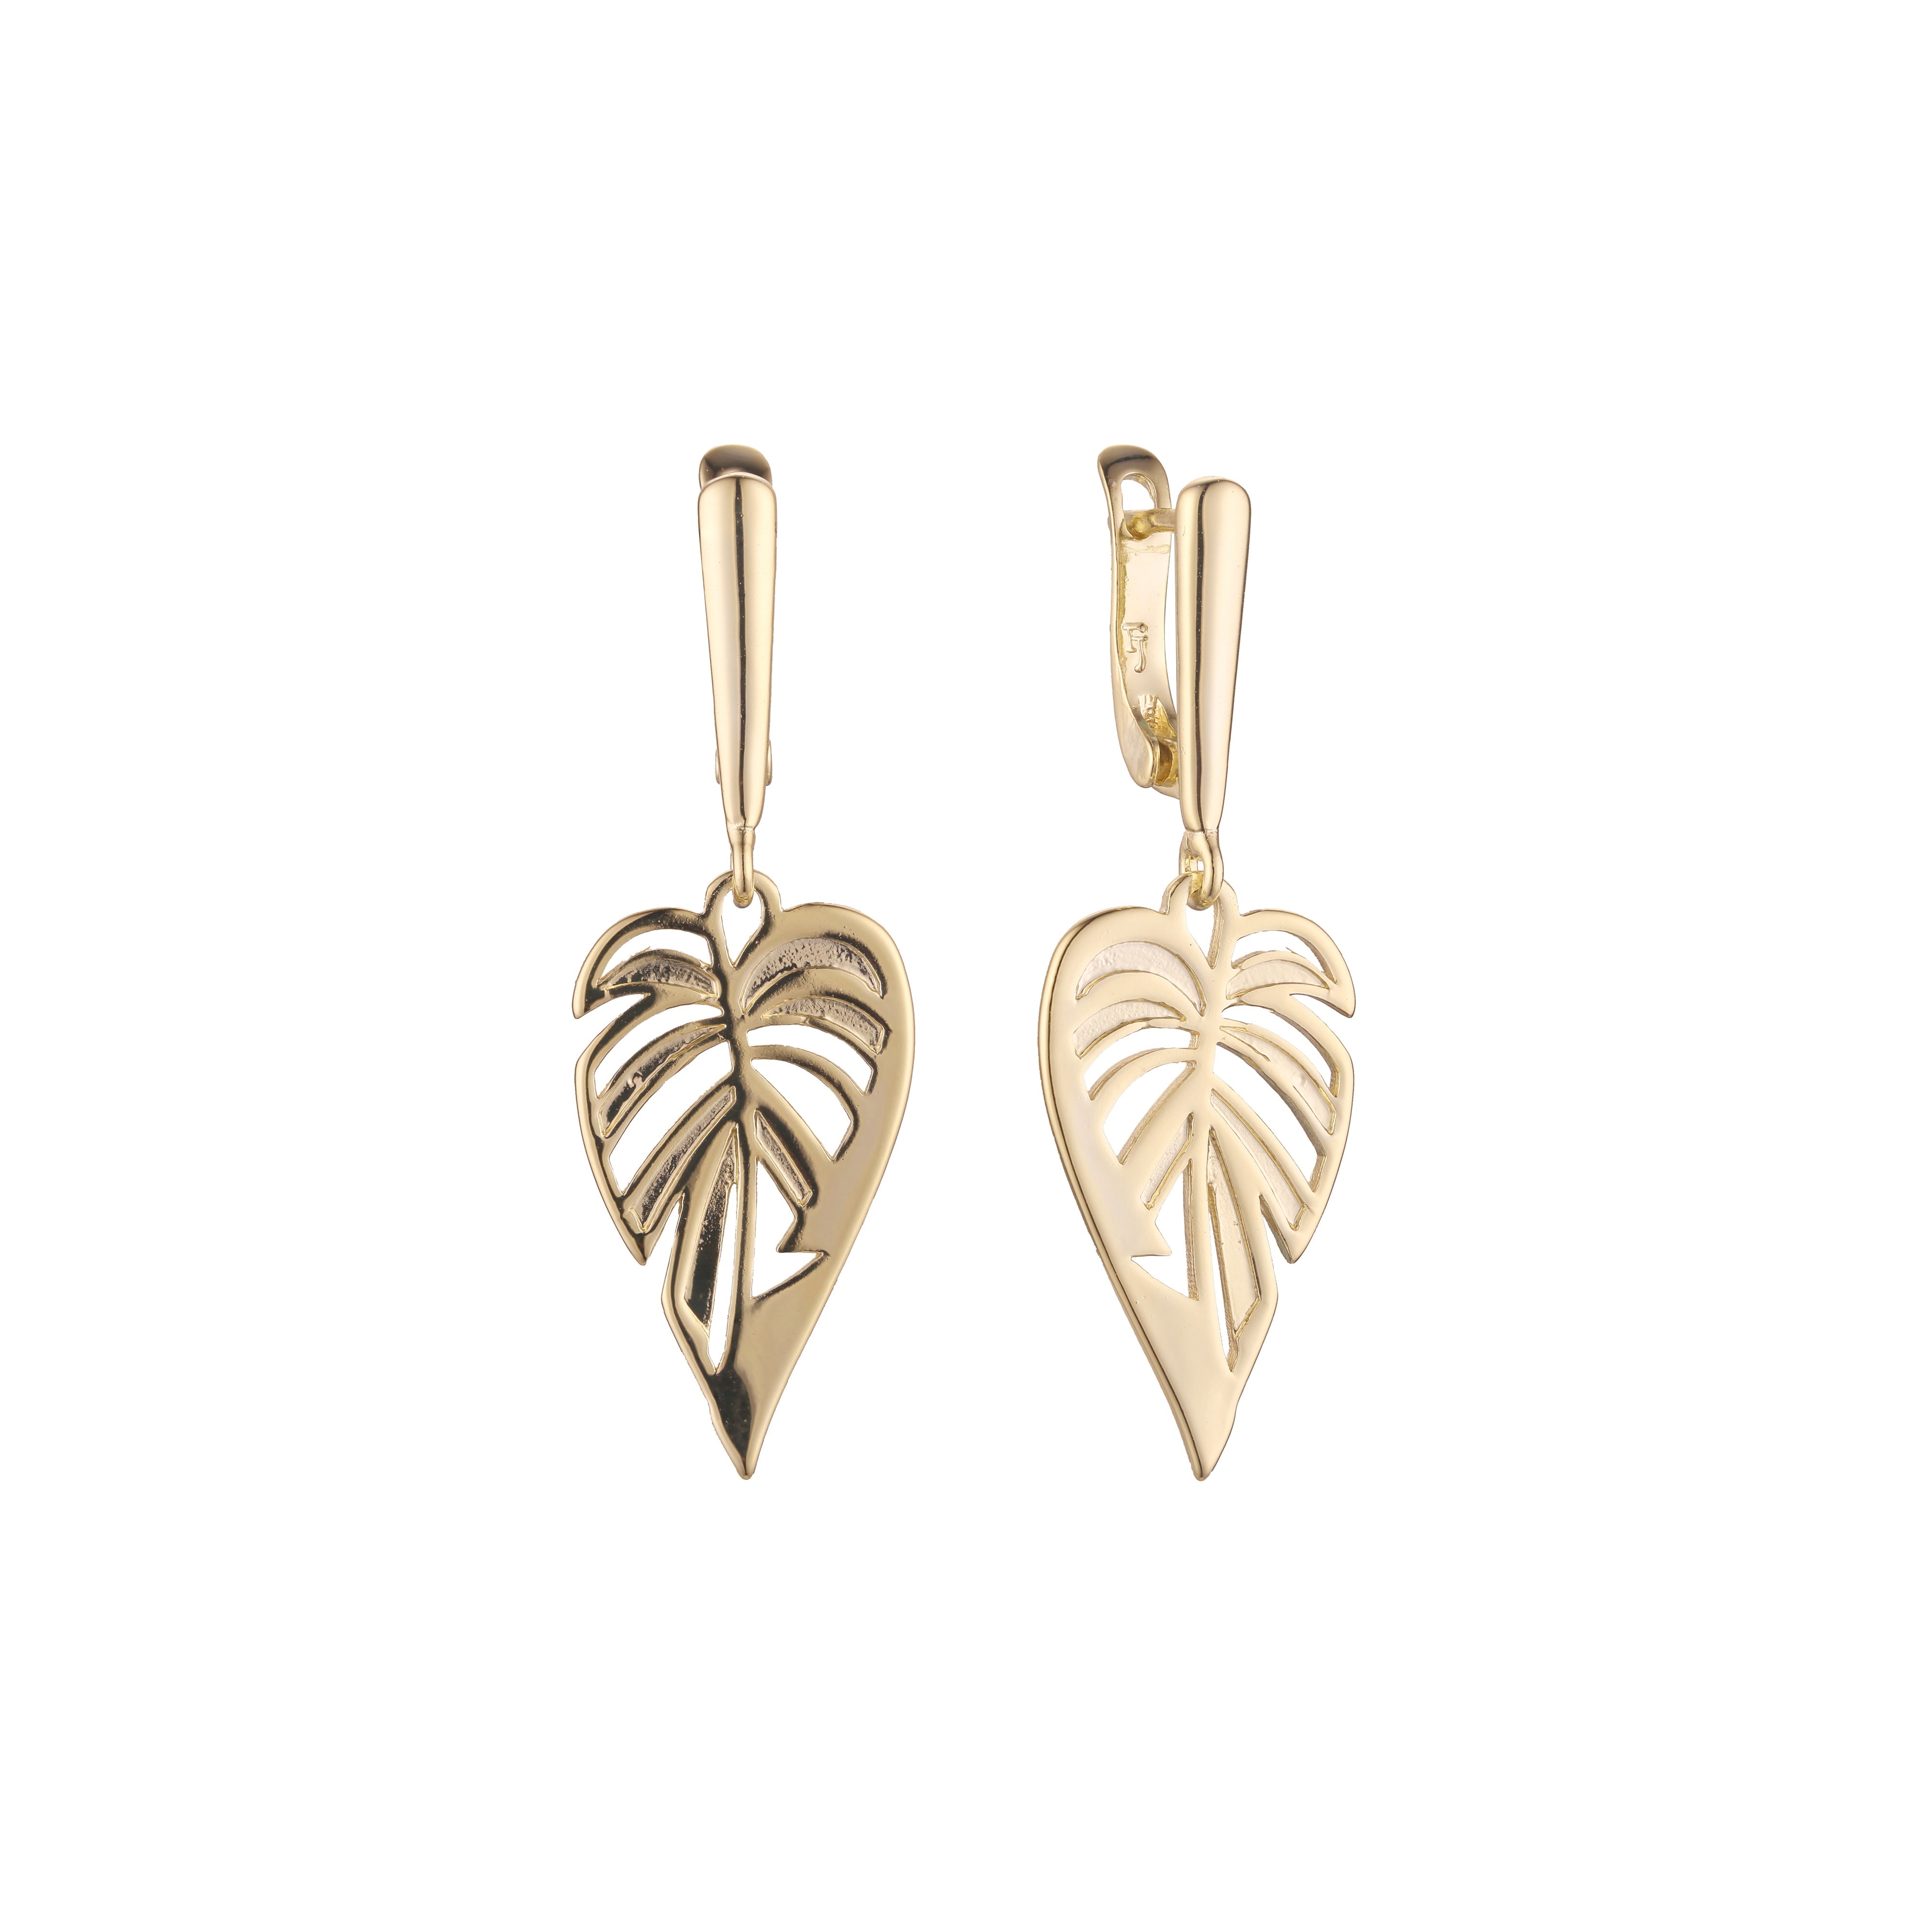 Leaves earrings in 14K Gold, Rose Gold plating colors